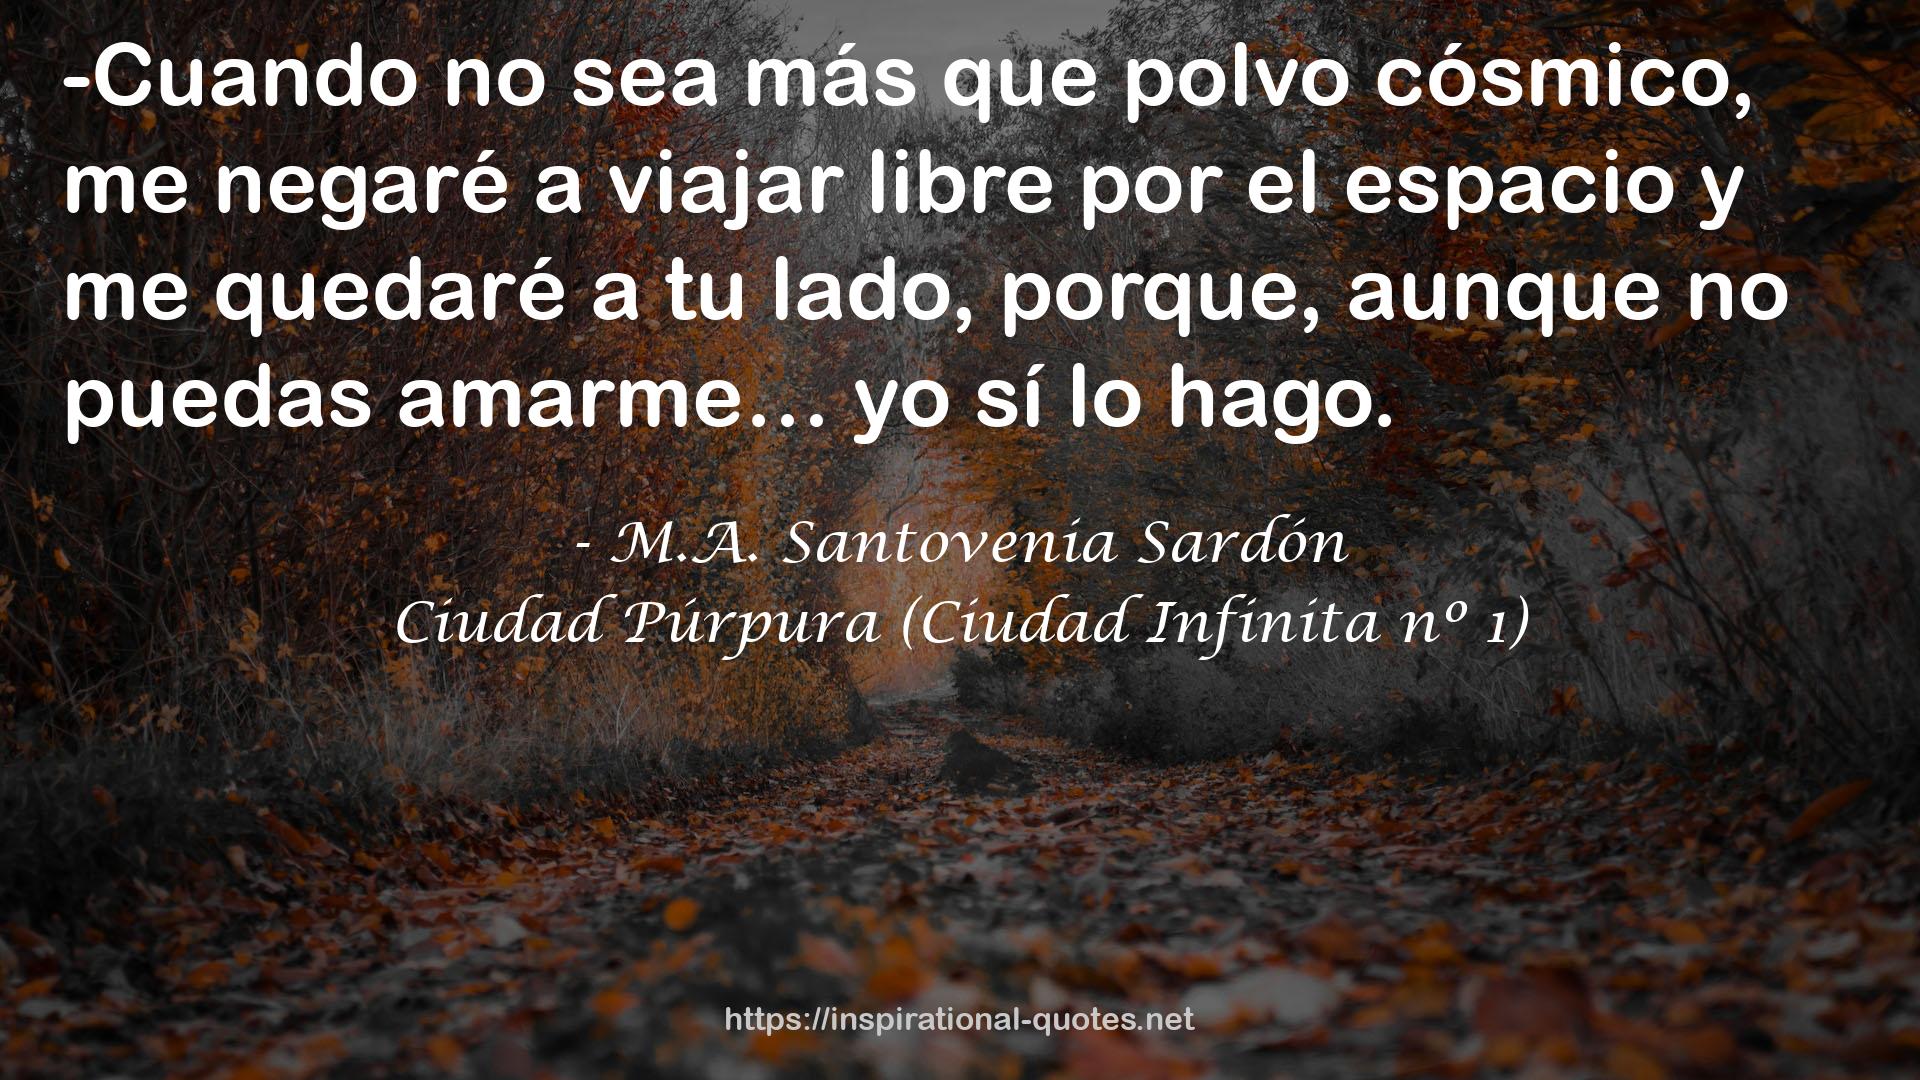 M.A. Santovenia Sardón QUOTES